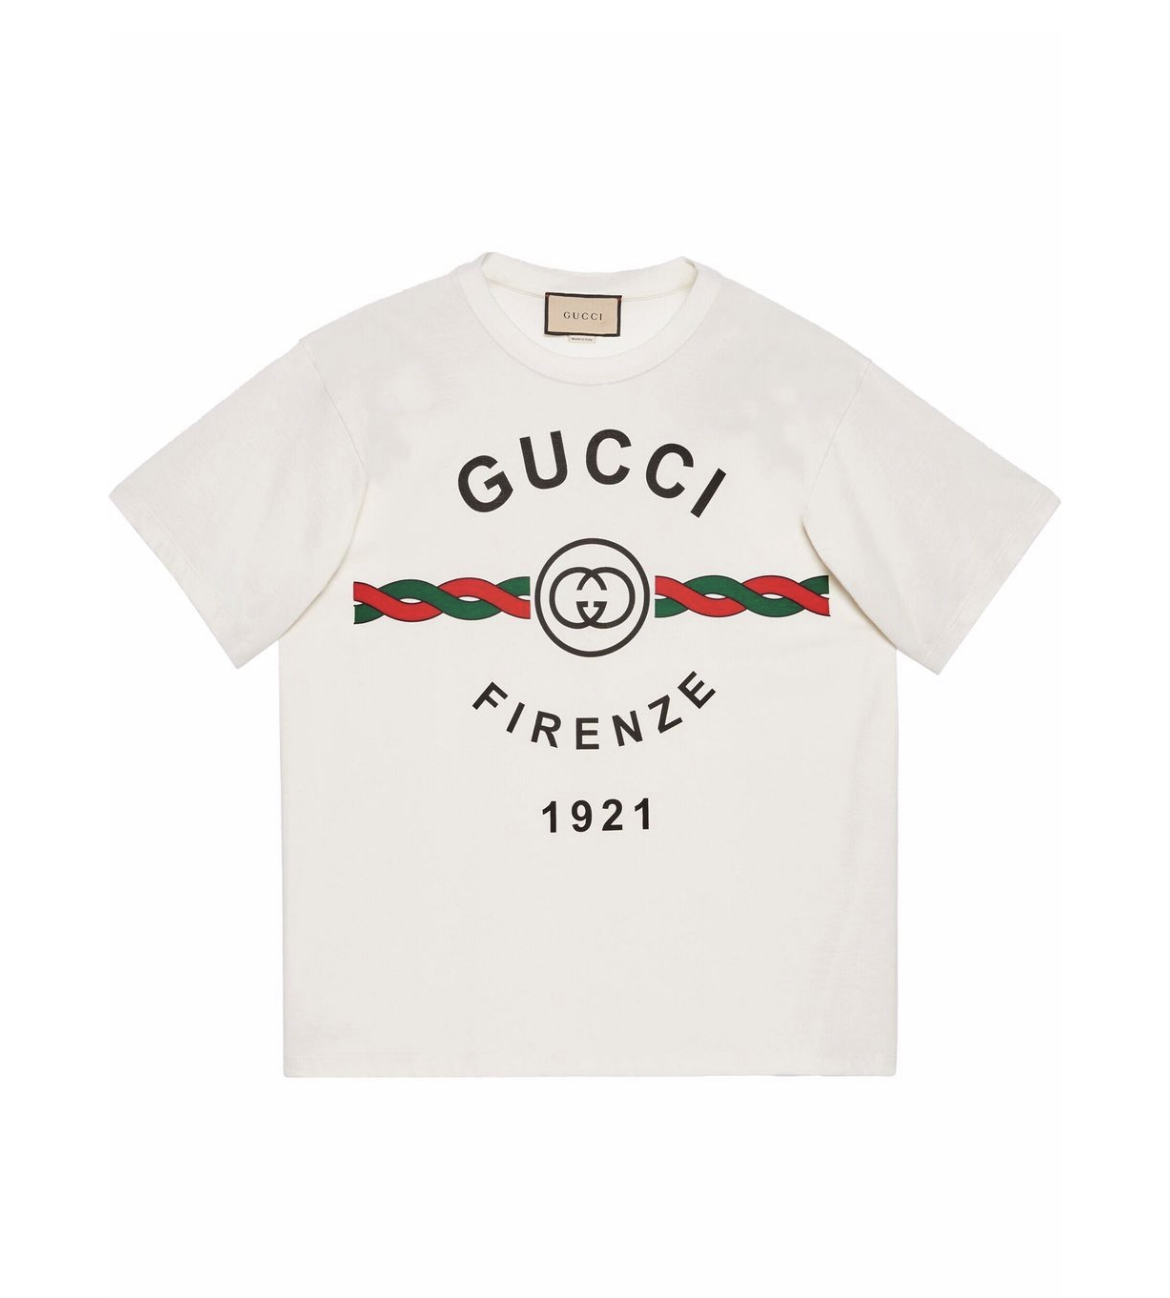 Gucci Firenze 1921 cotton tshirt